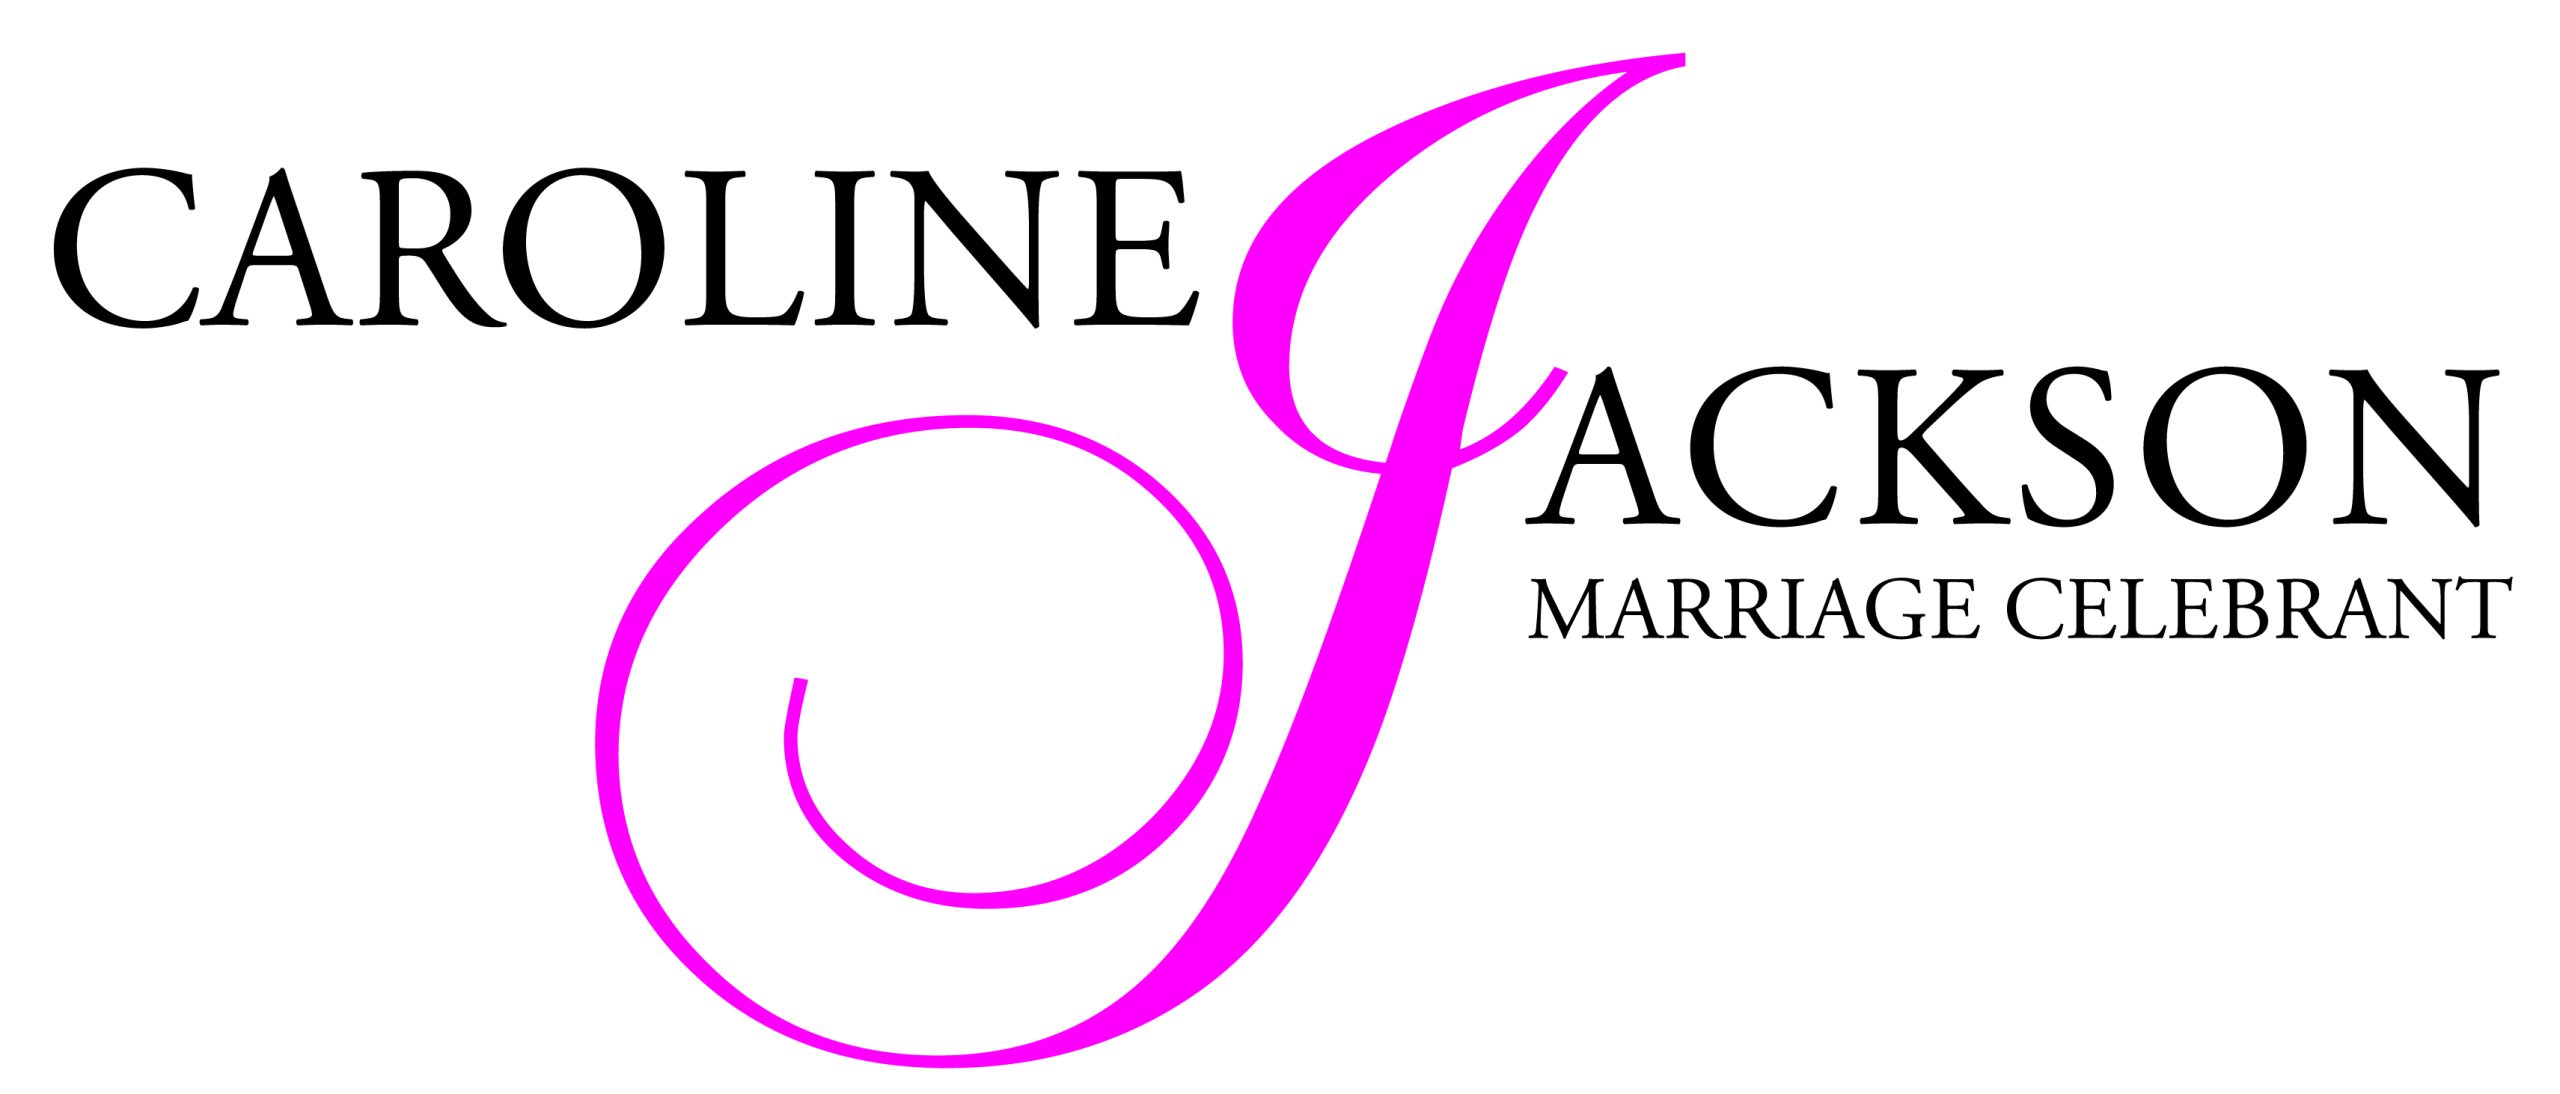 Caroline Jackson Wedding Celebrant on Tamborine Mountain